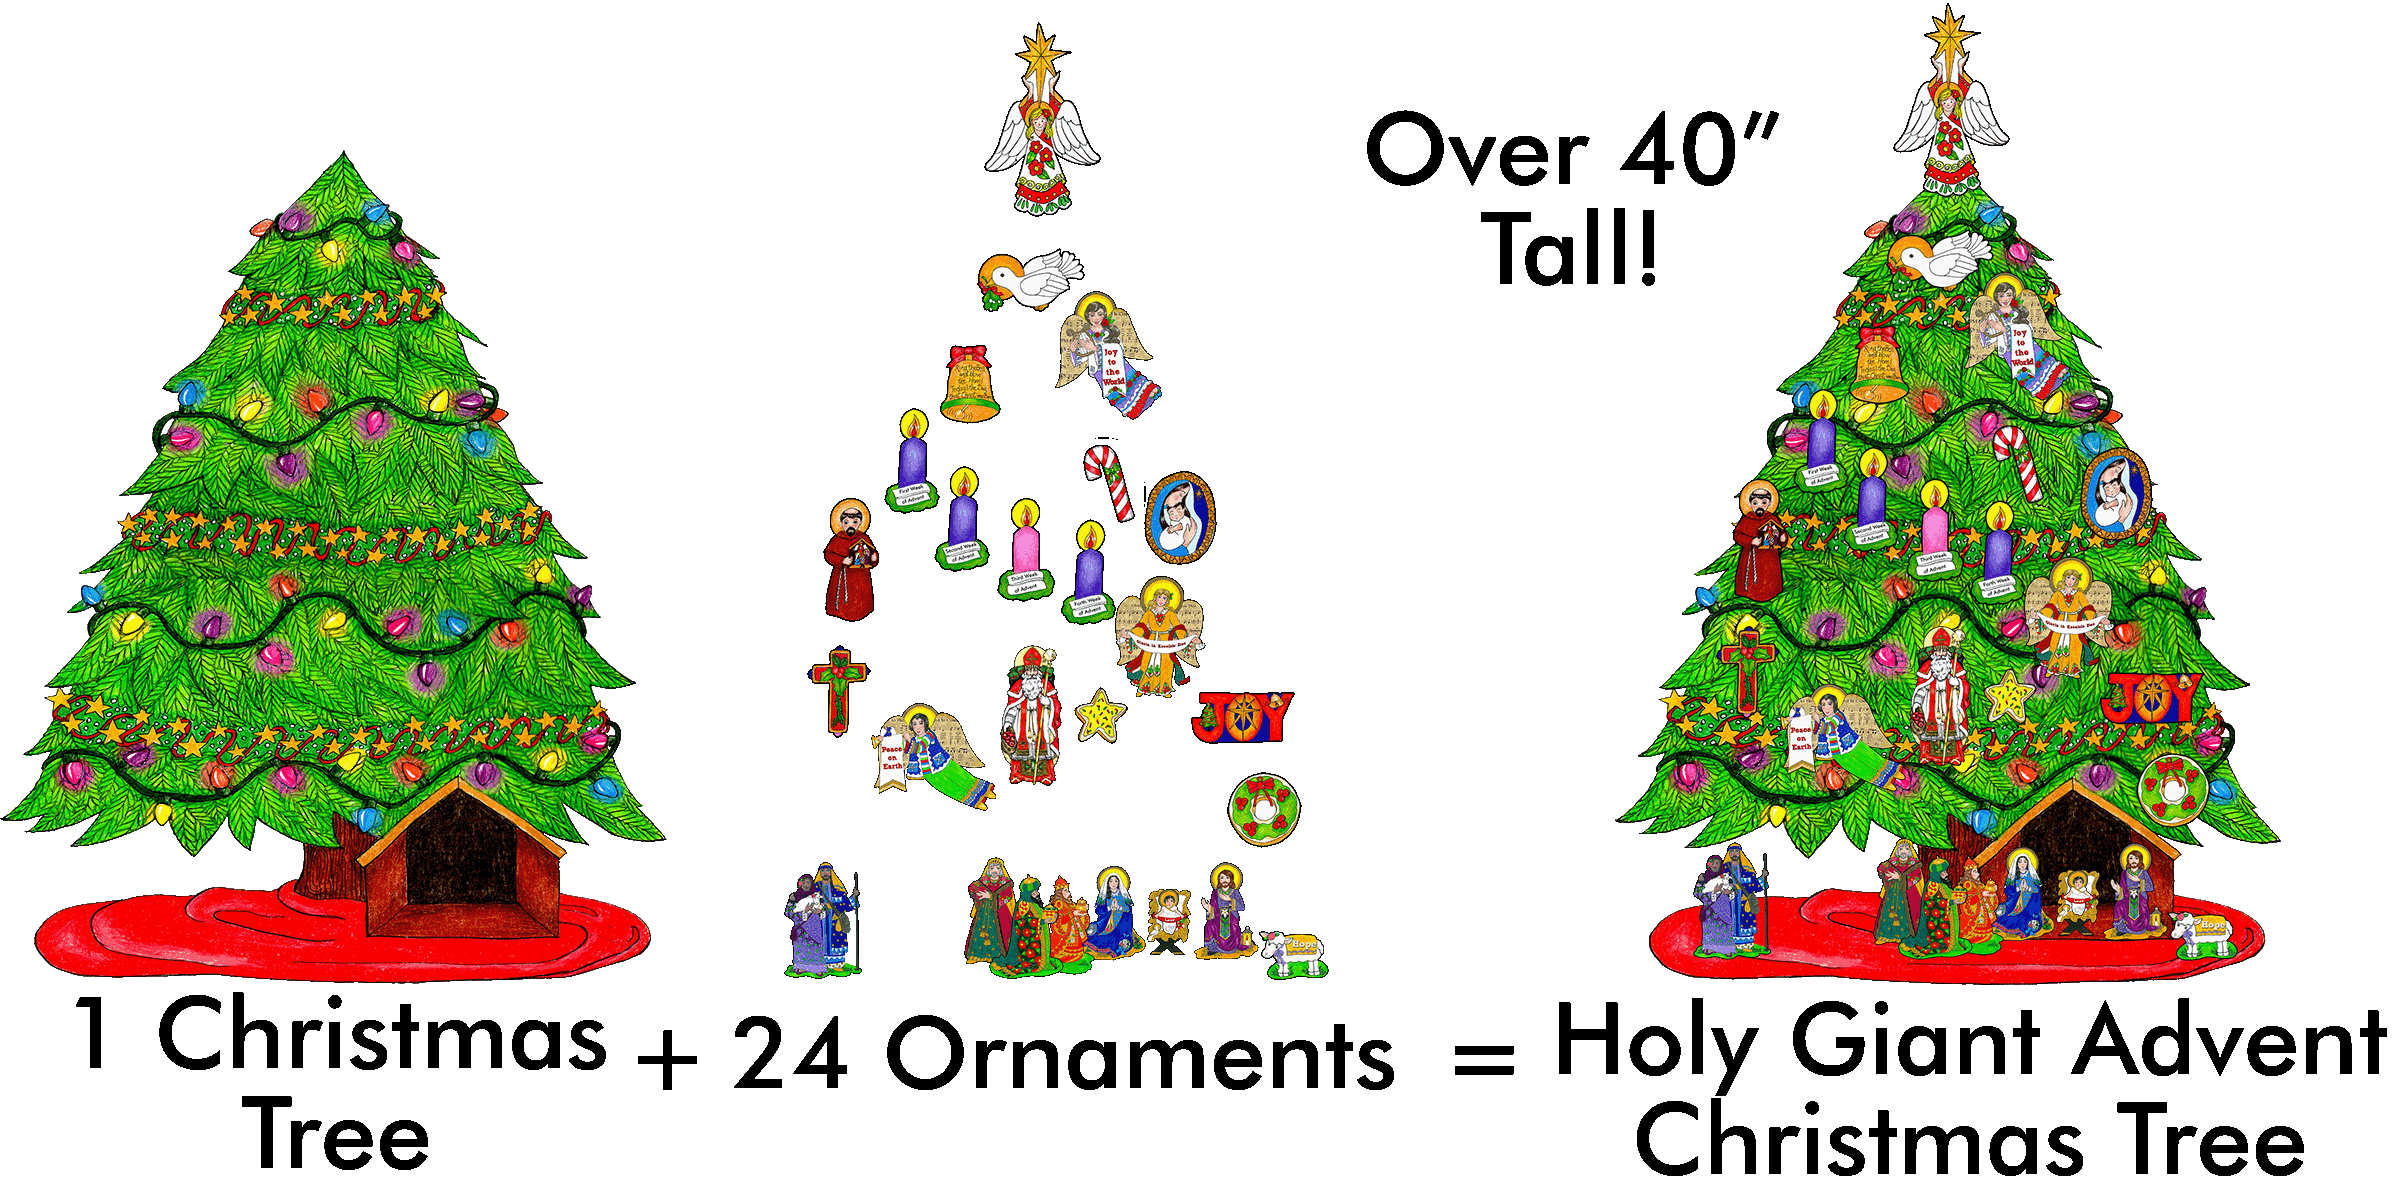 Holy Giants Advent Christmas Tree